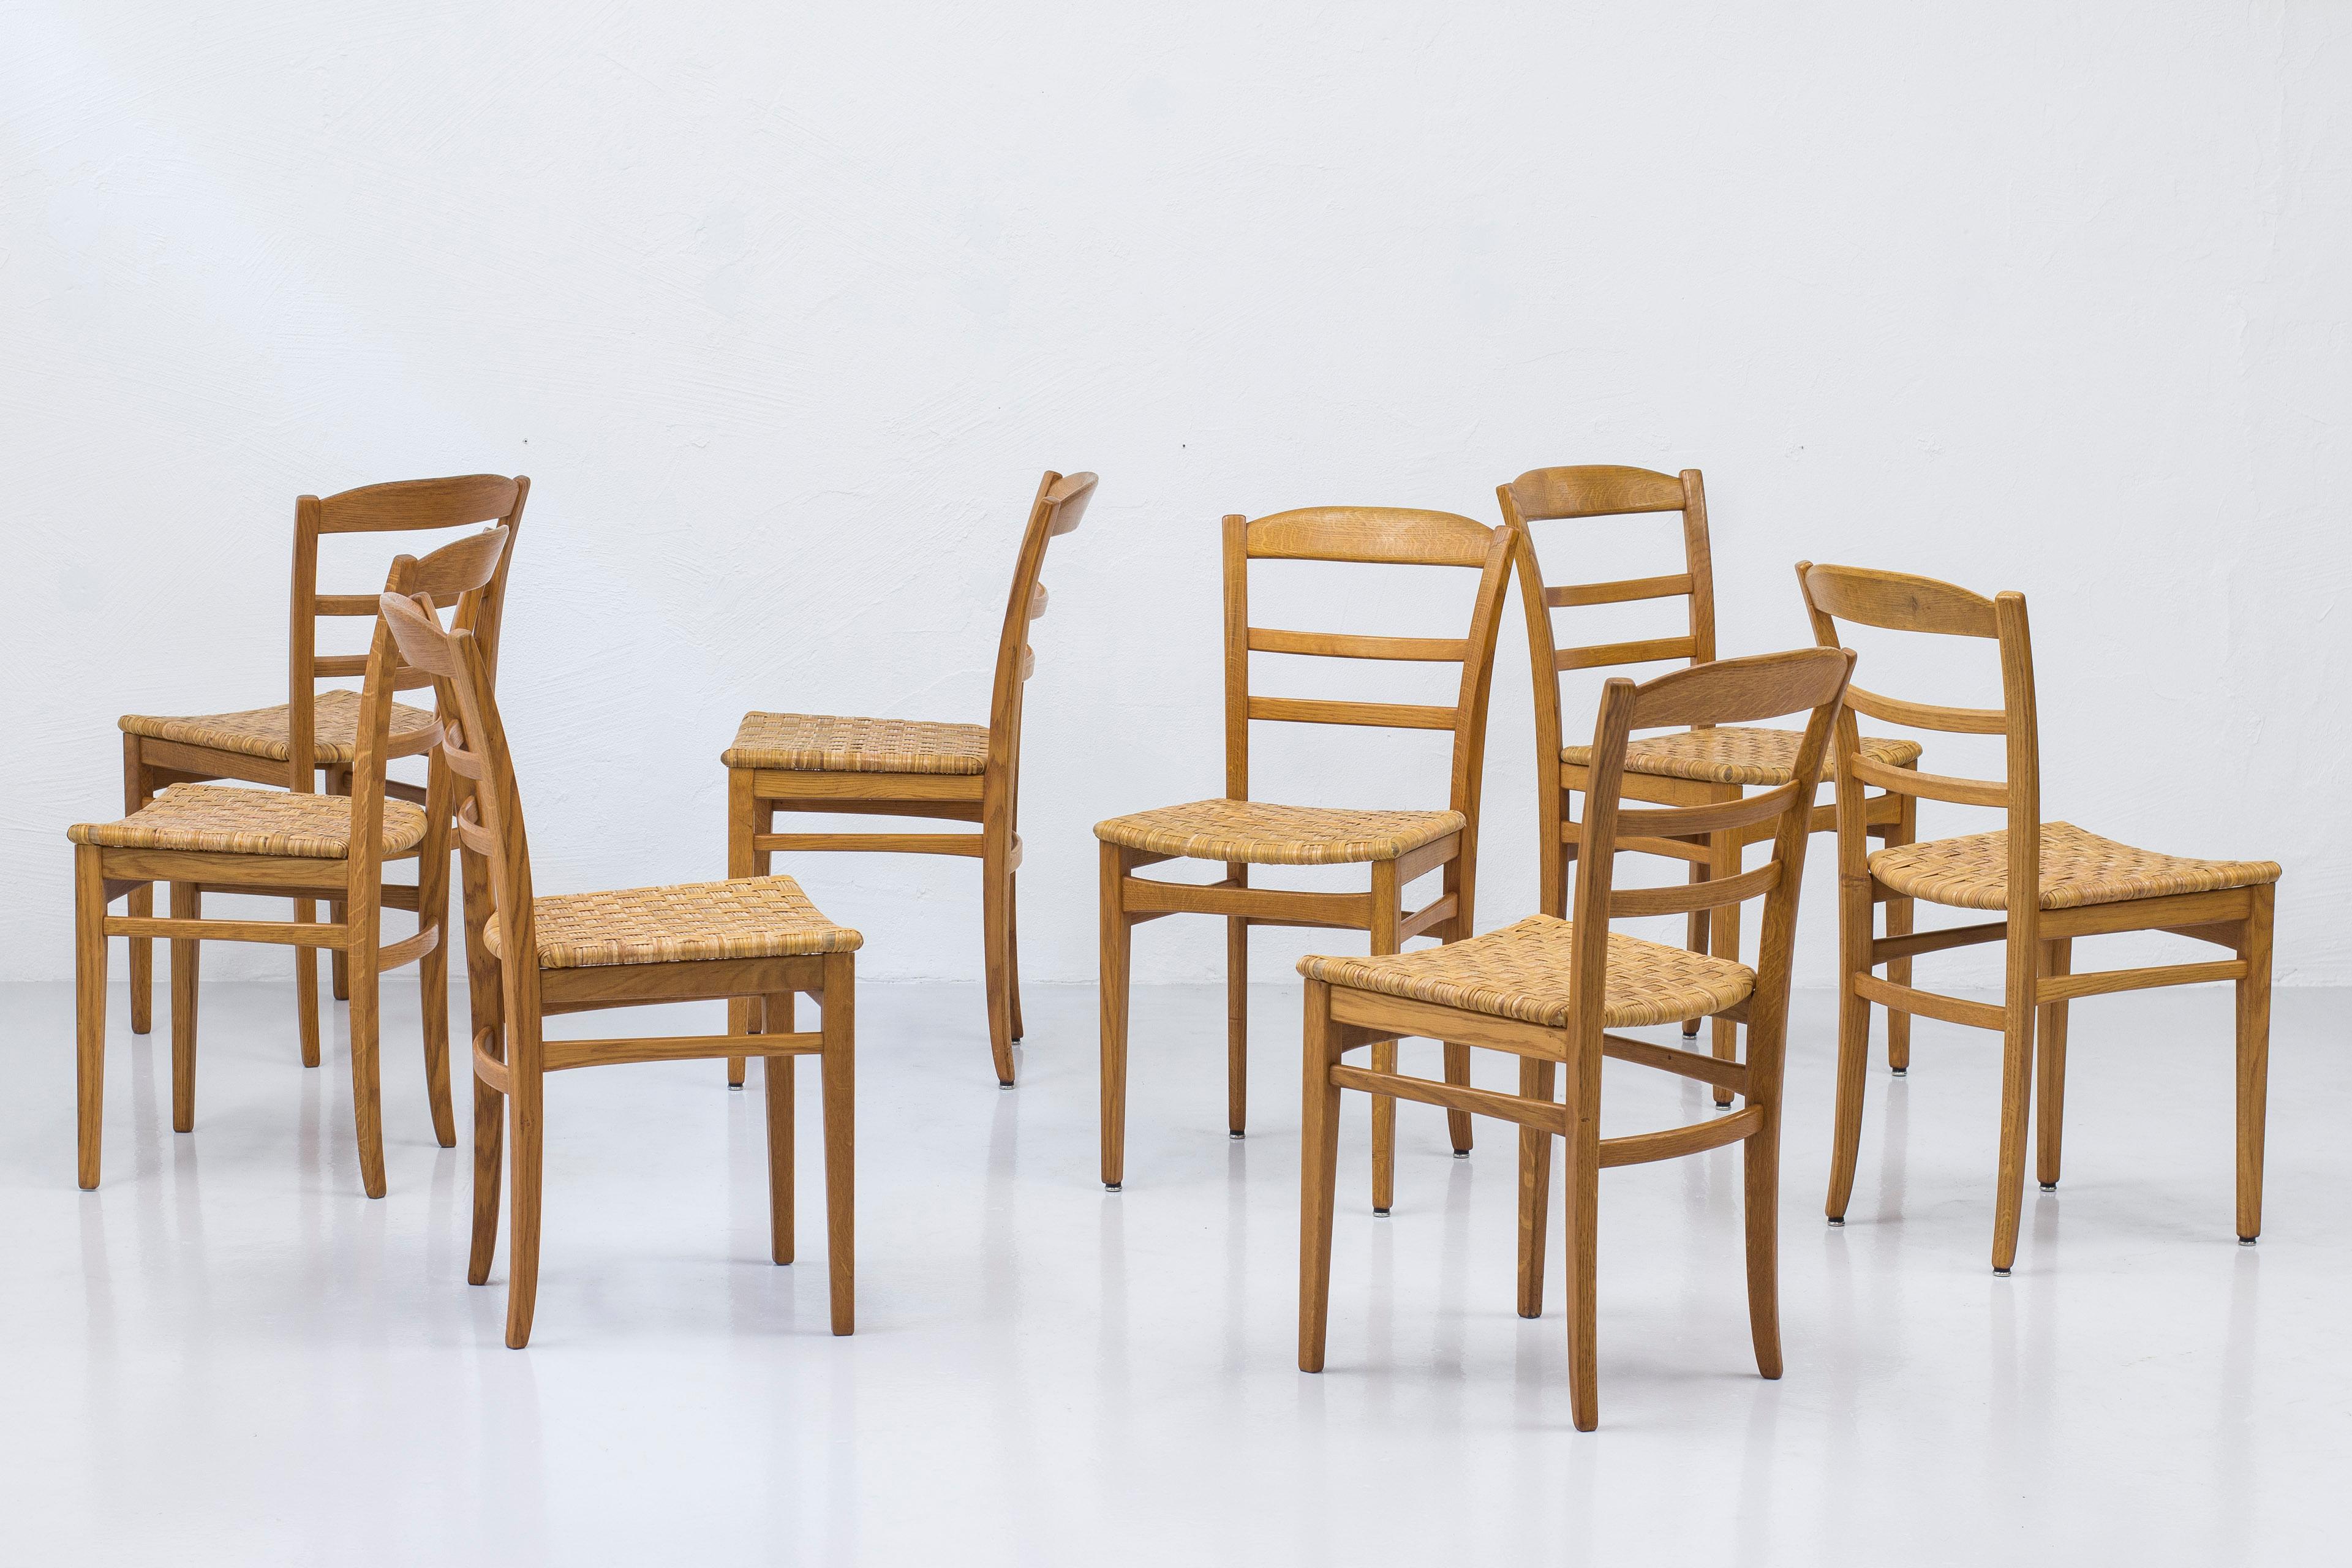 Scandinavian Modern Oak and Cane Weave Dining Chairs by Carl Malmsten, Swedish Modern, 1950s For Sale